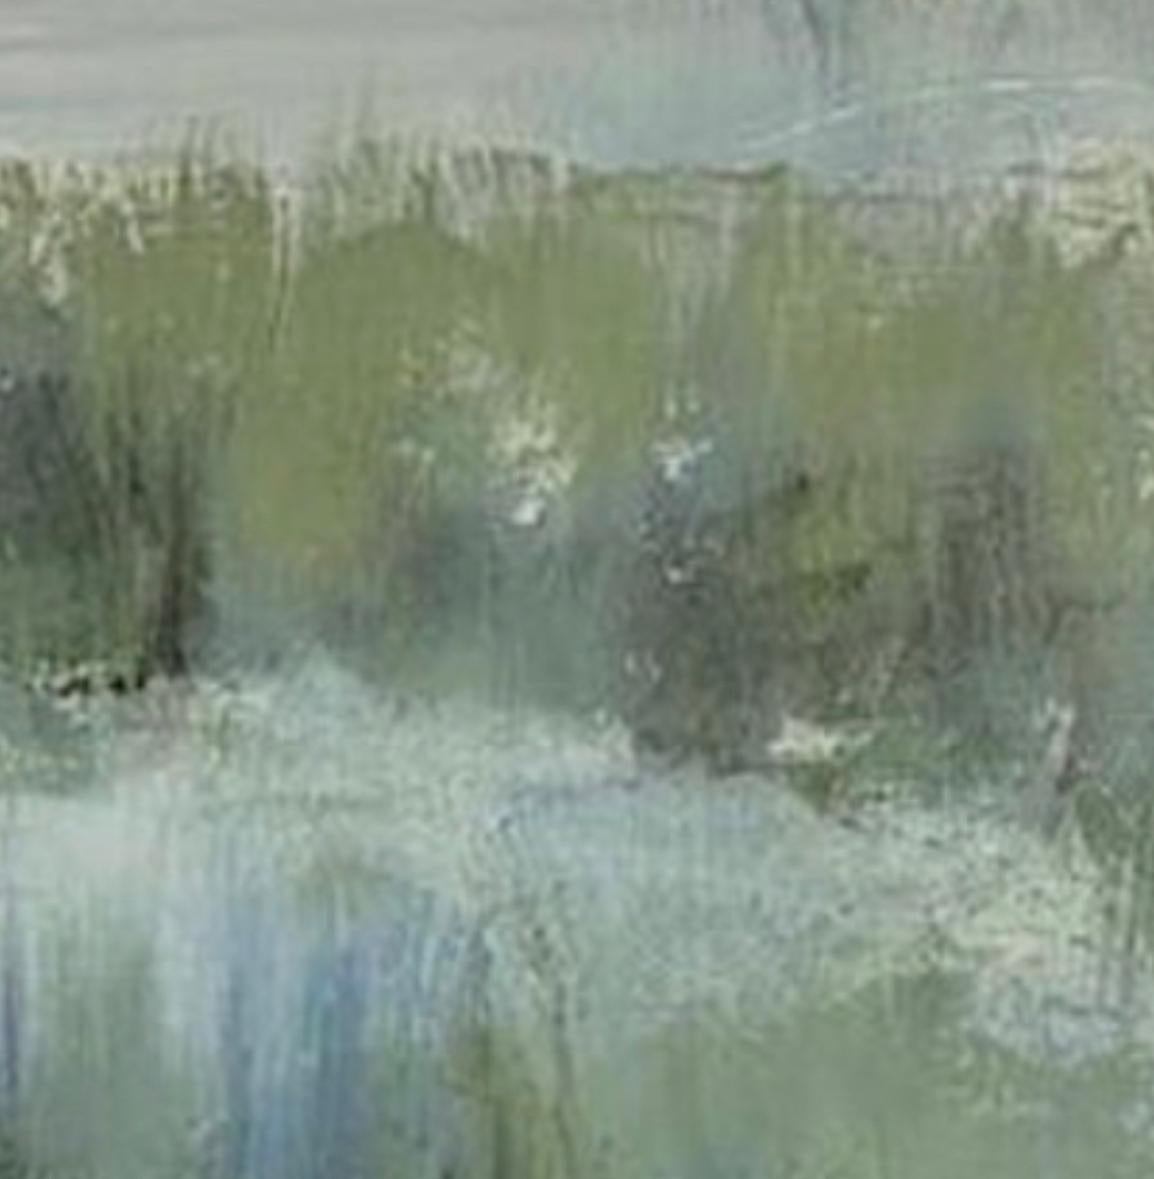 The marsh's brim, Contemporary marsh painting, green, blue, white - Painting by Juanita Bellavance 